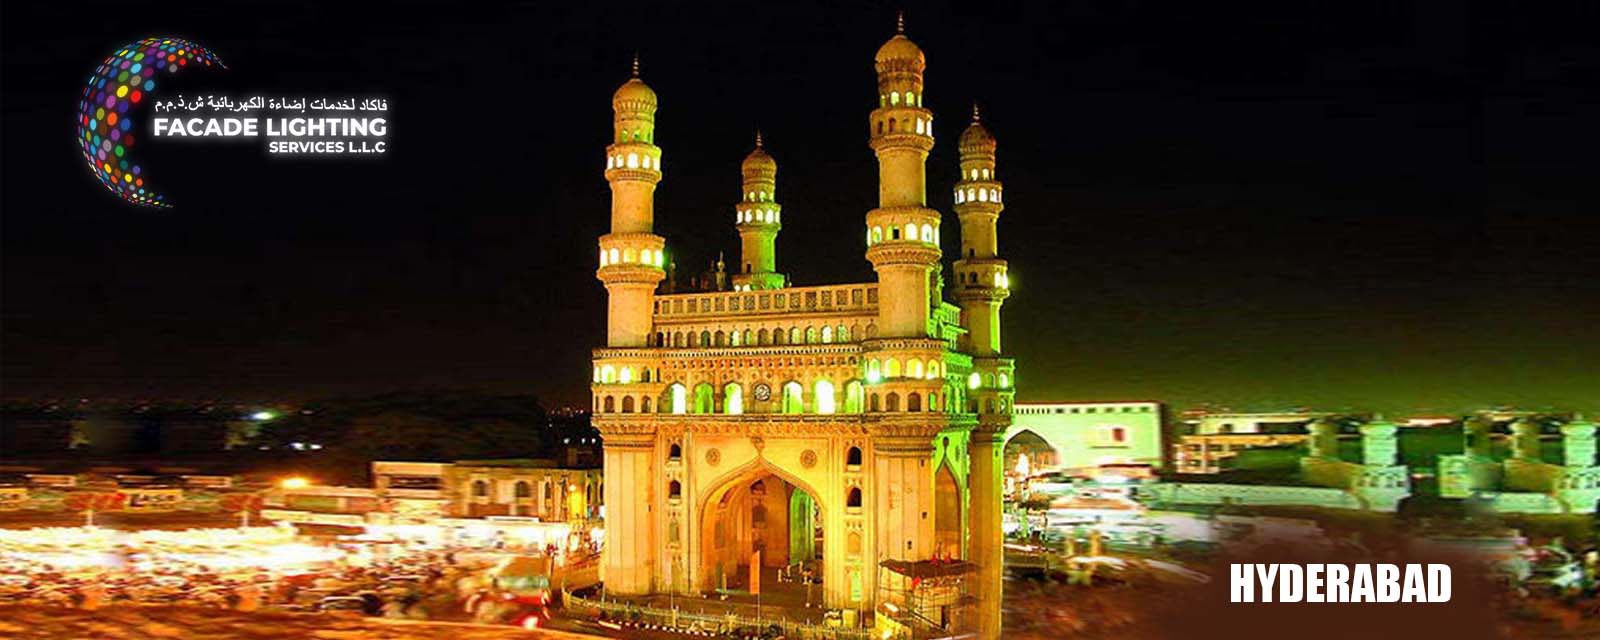 Hyderabad facade lighting